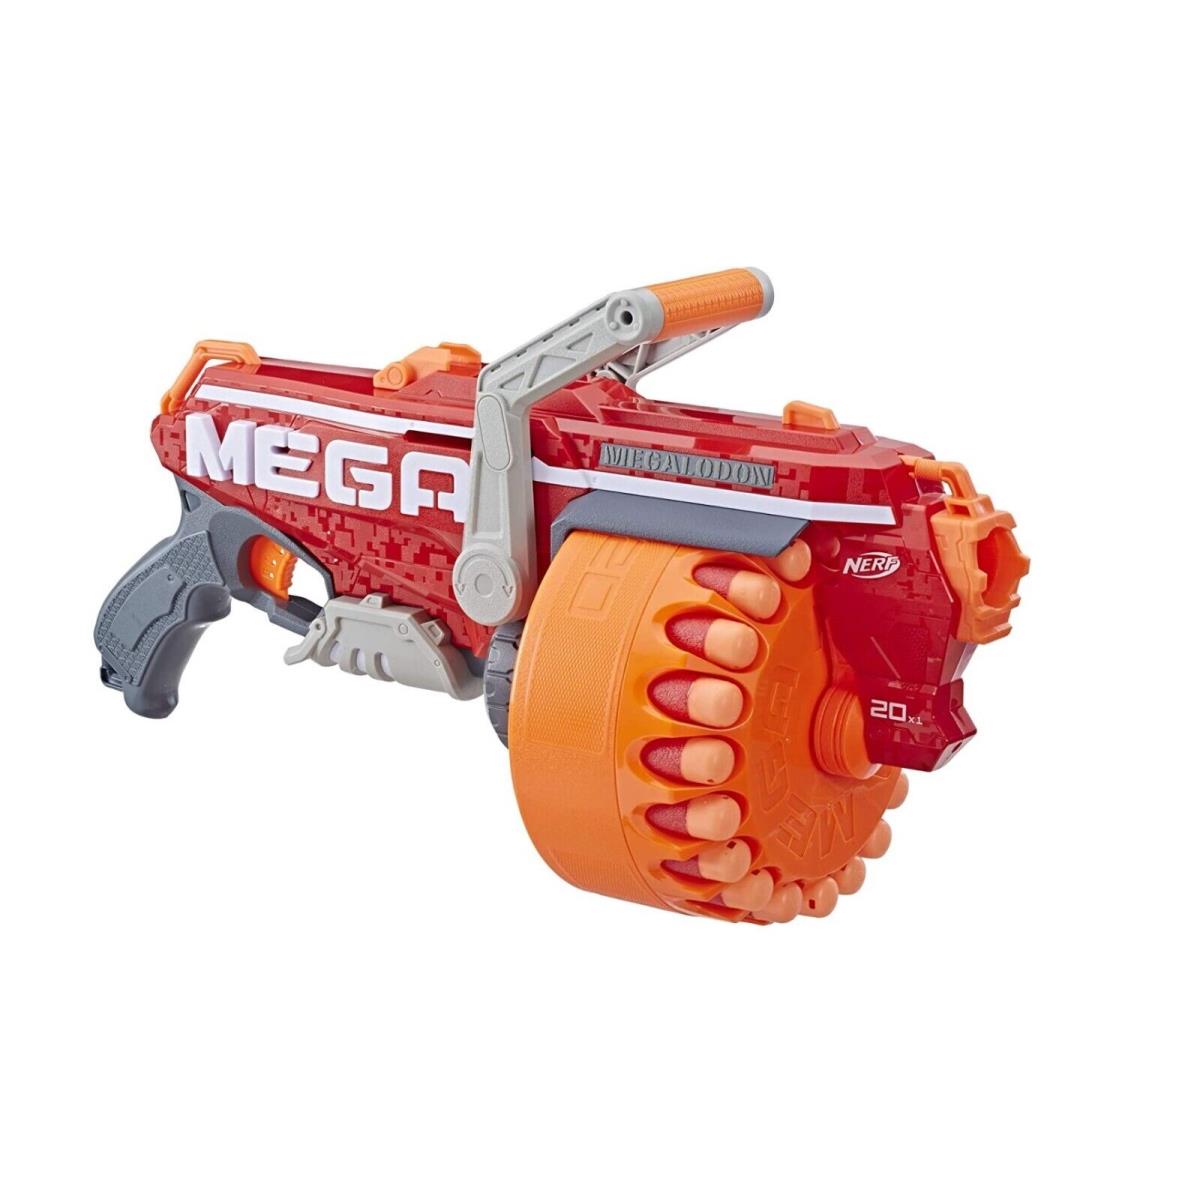 Nerf Megalodon N-strike Mega Toy Blaster with 60 Darts